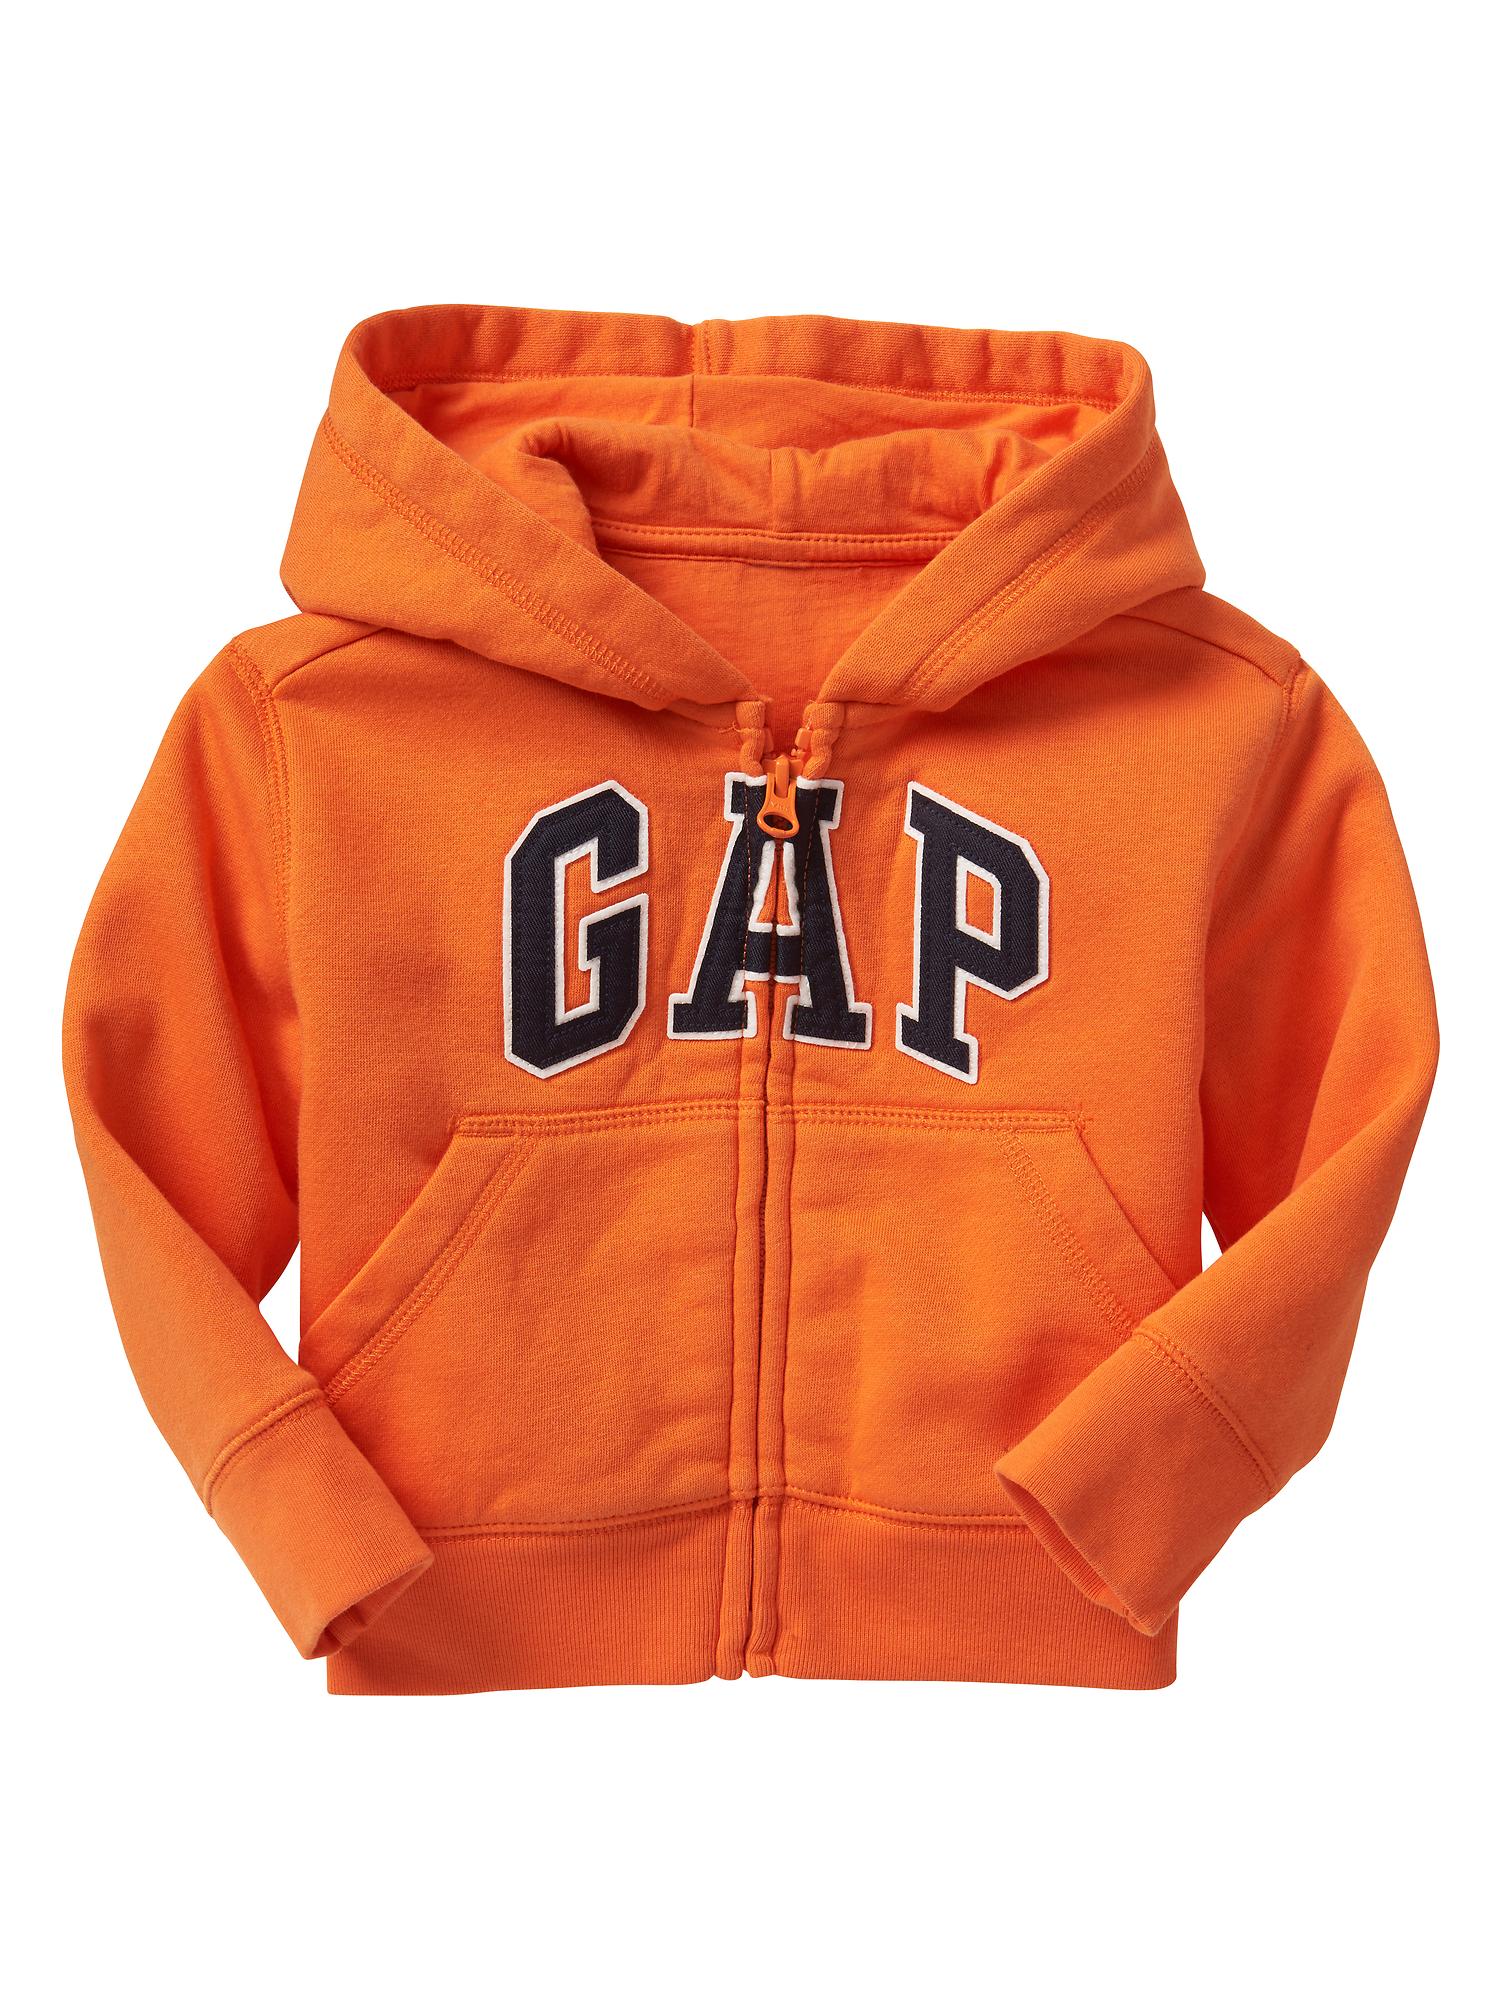 gap orange sweatshirt